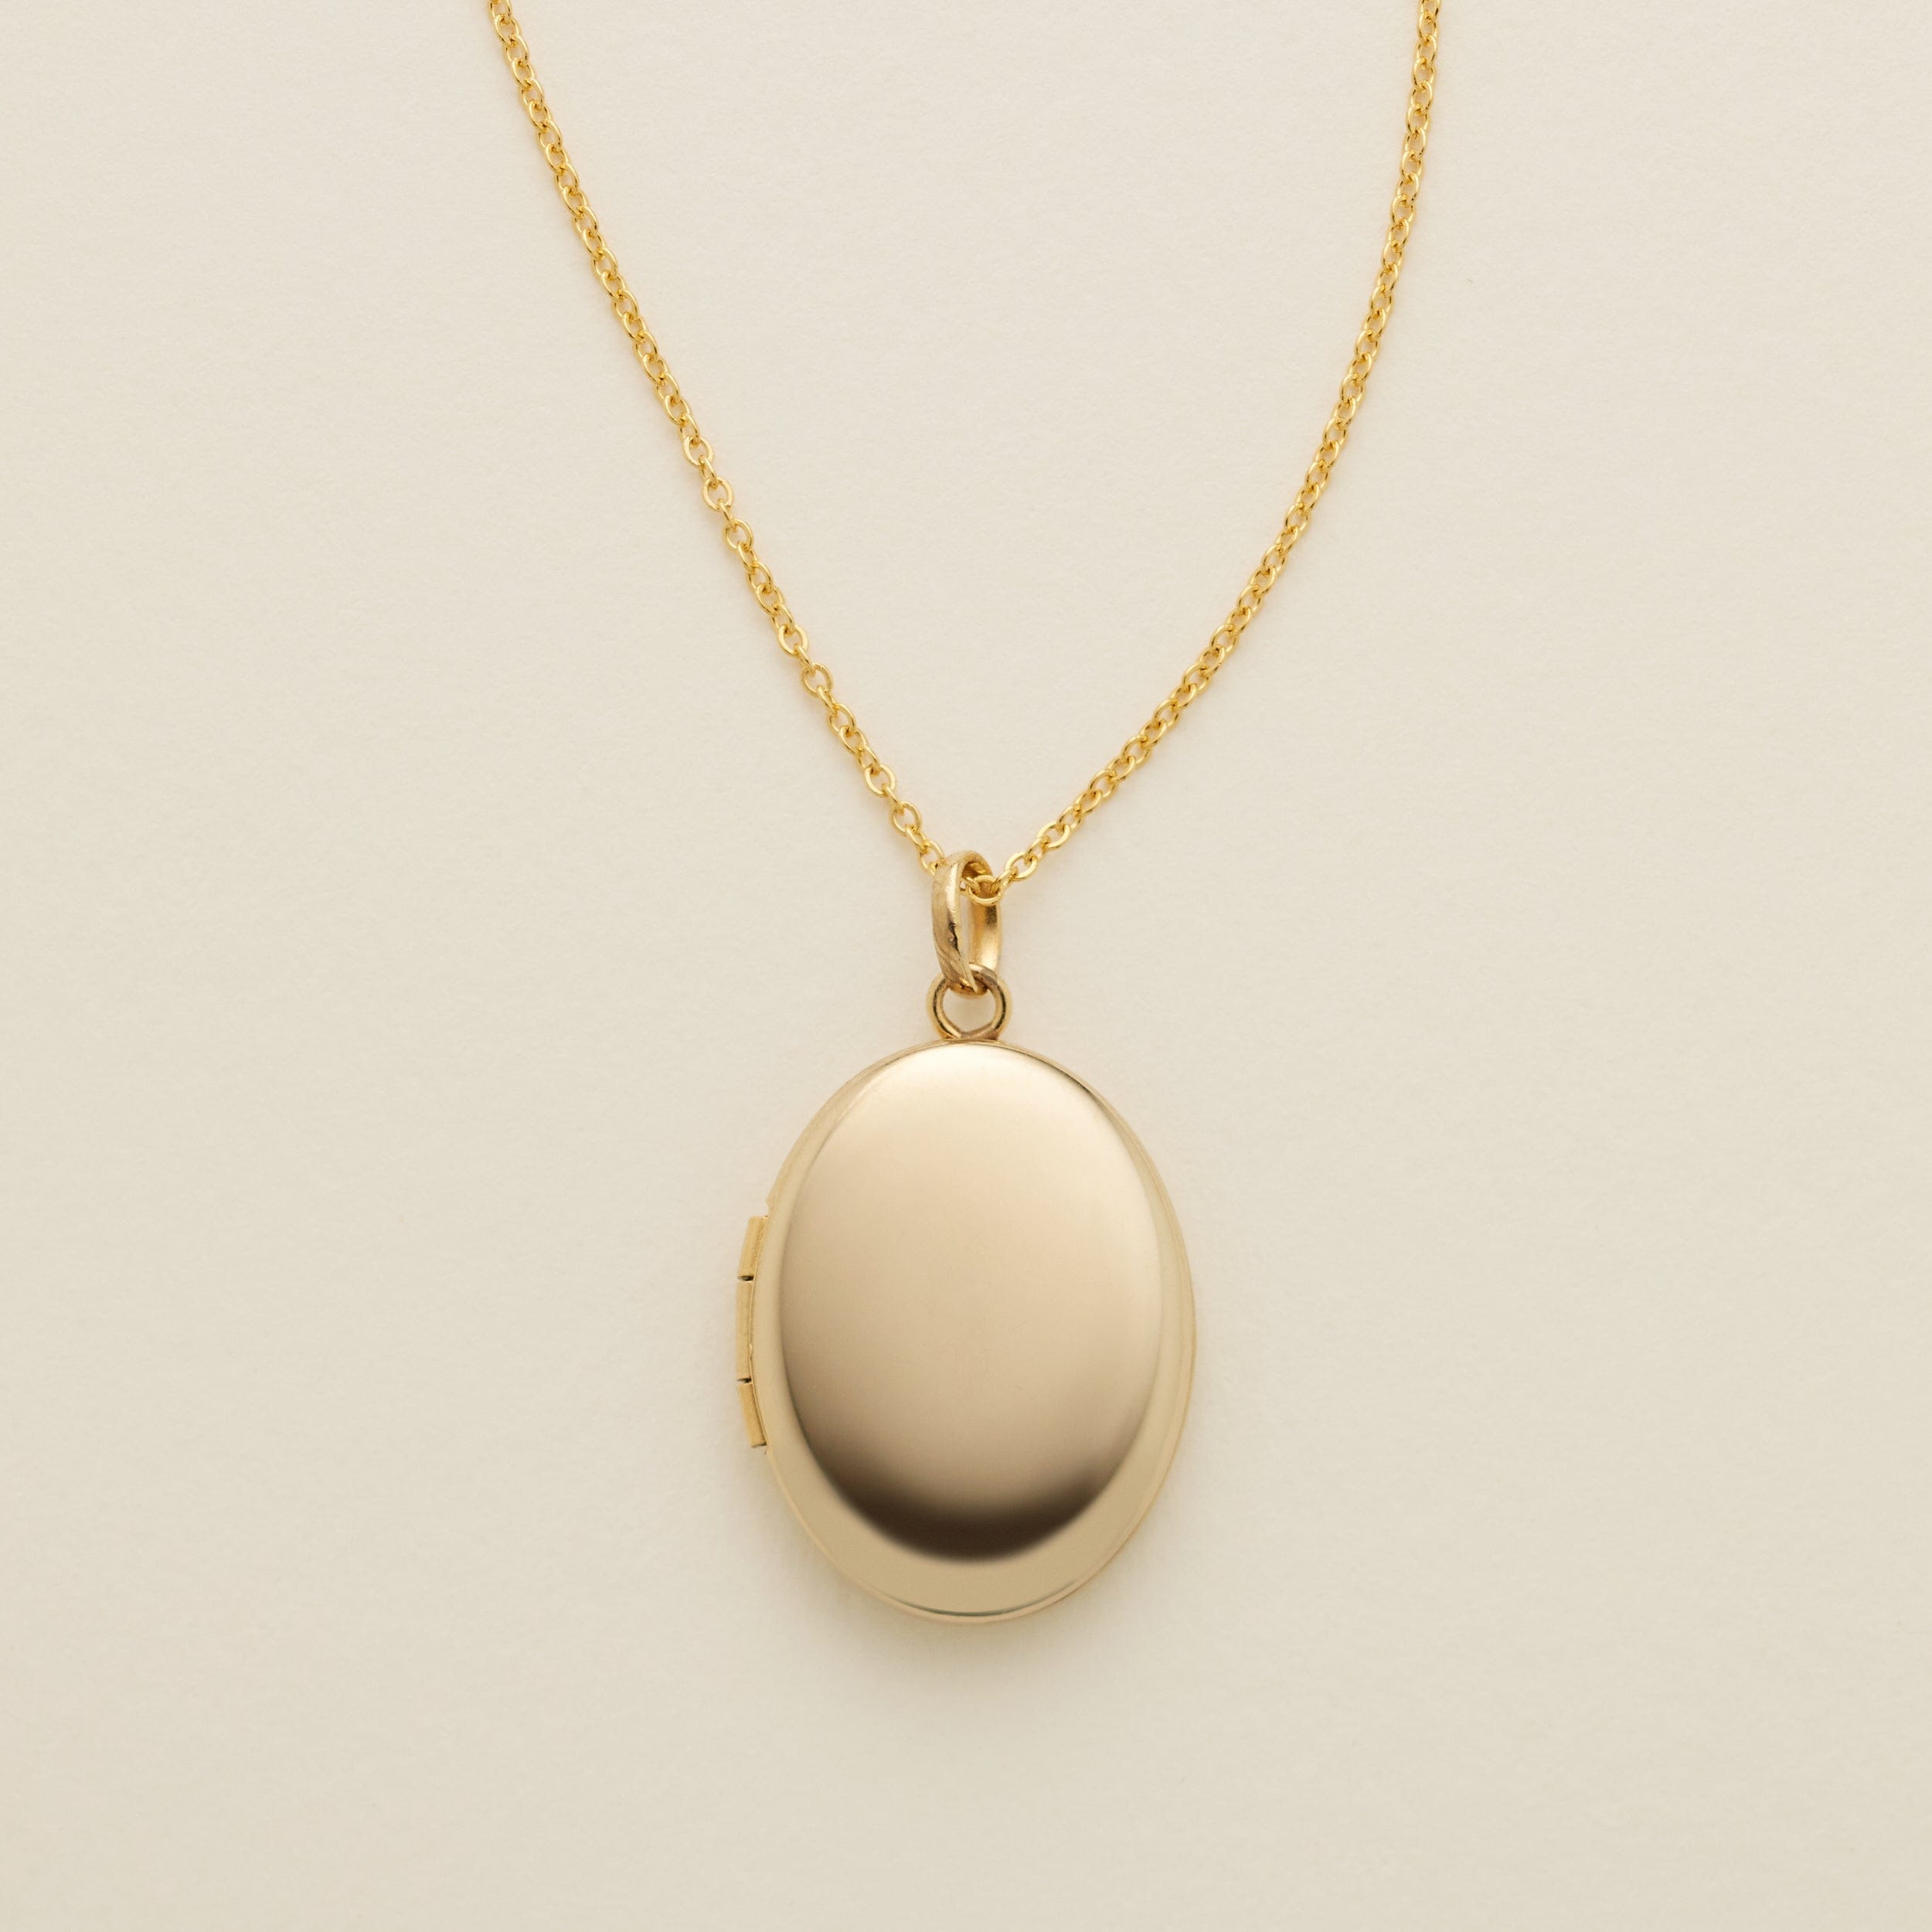 Oval Locket Necklace Gold Filled / 16"-18" Necklace